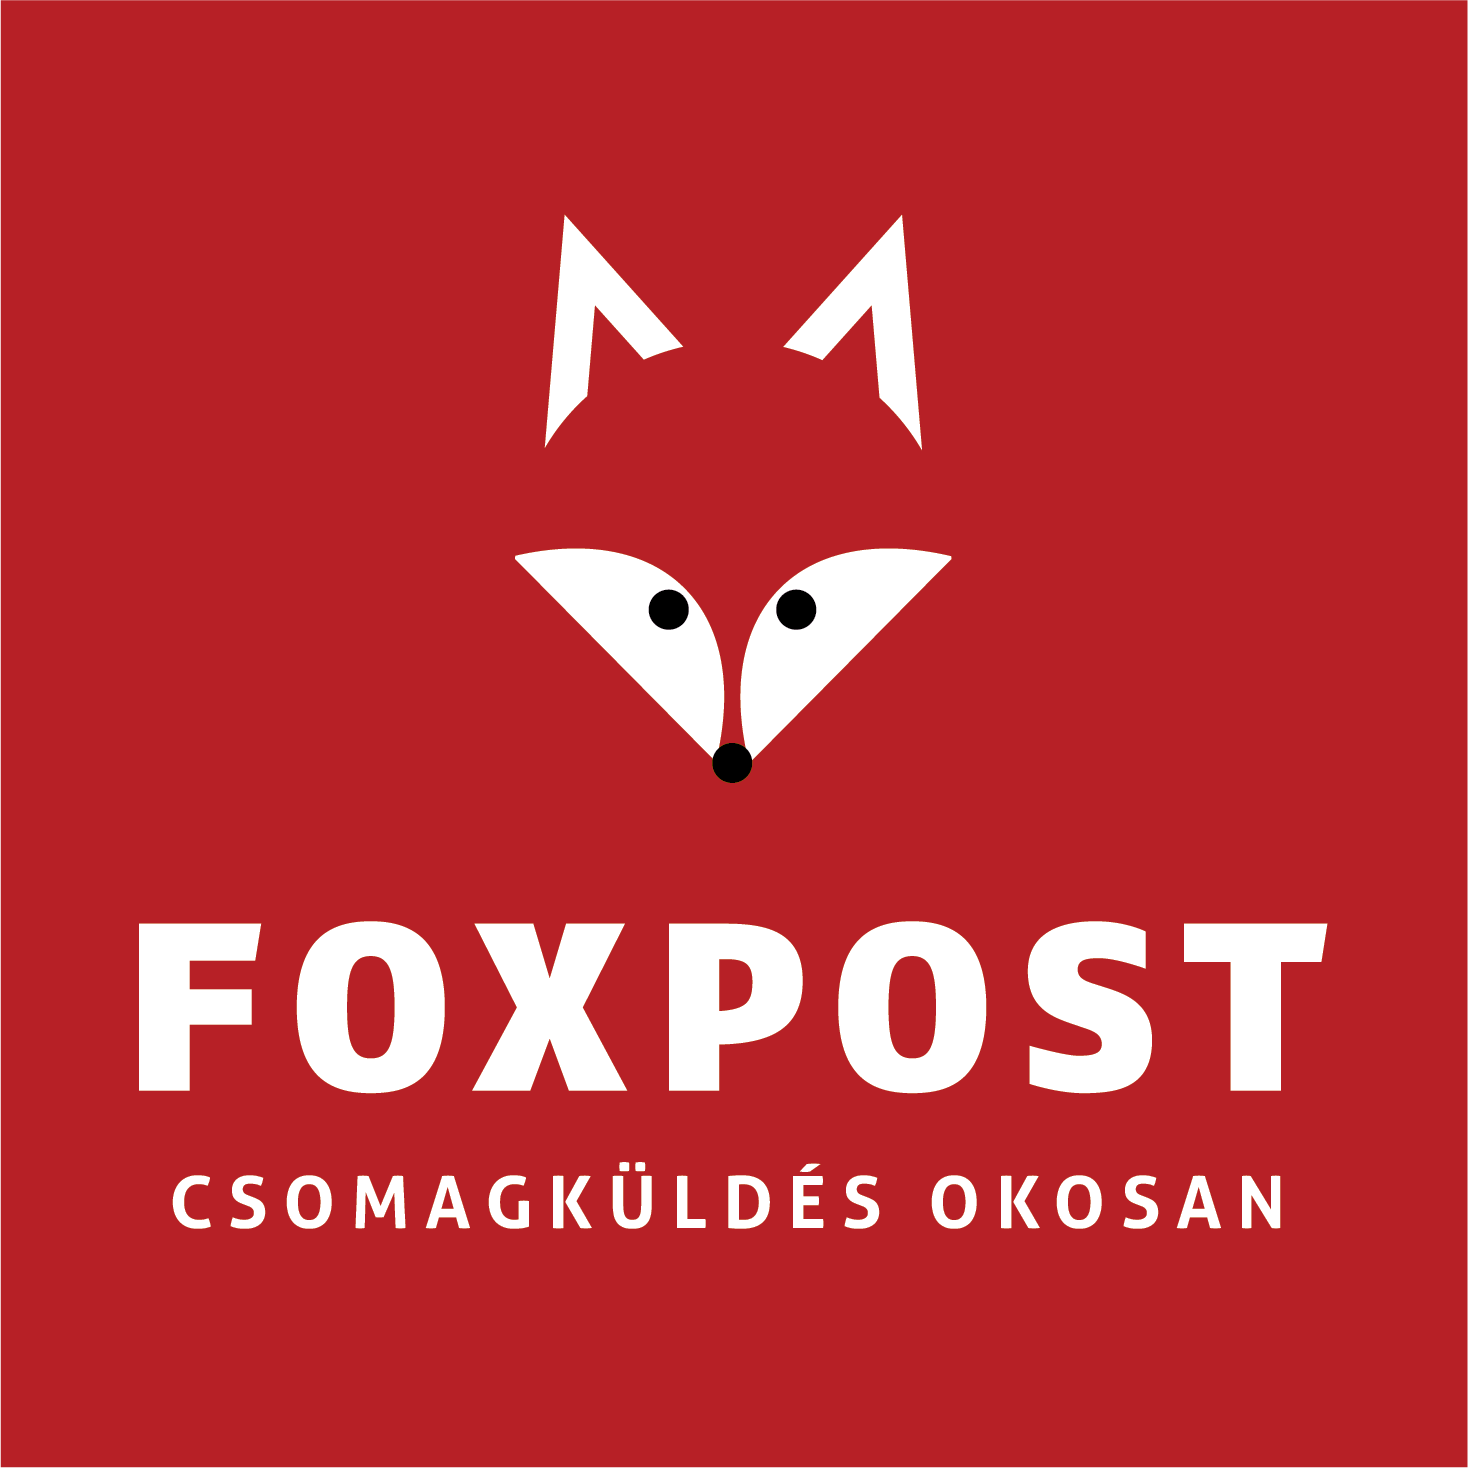 FoxPost Csomagautotmata